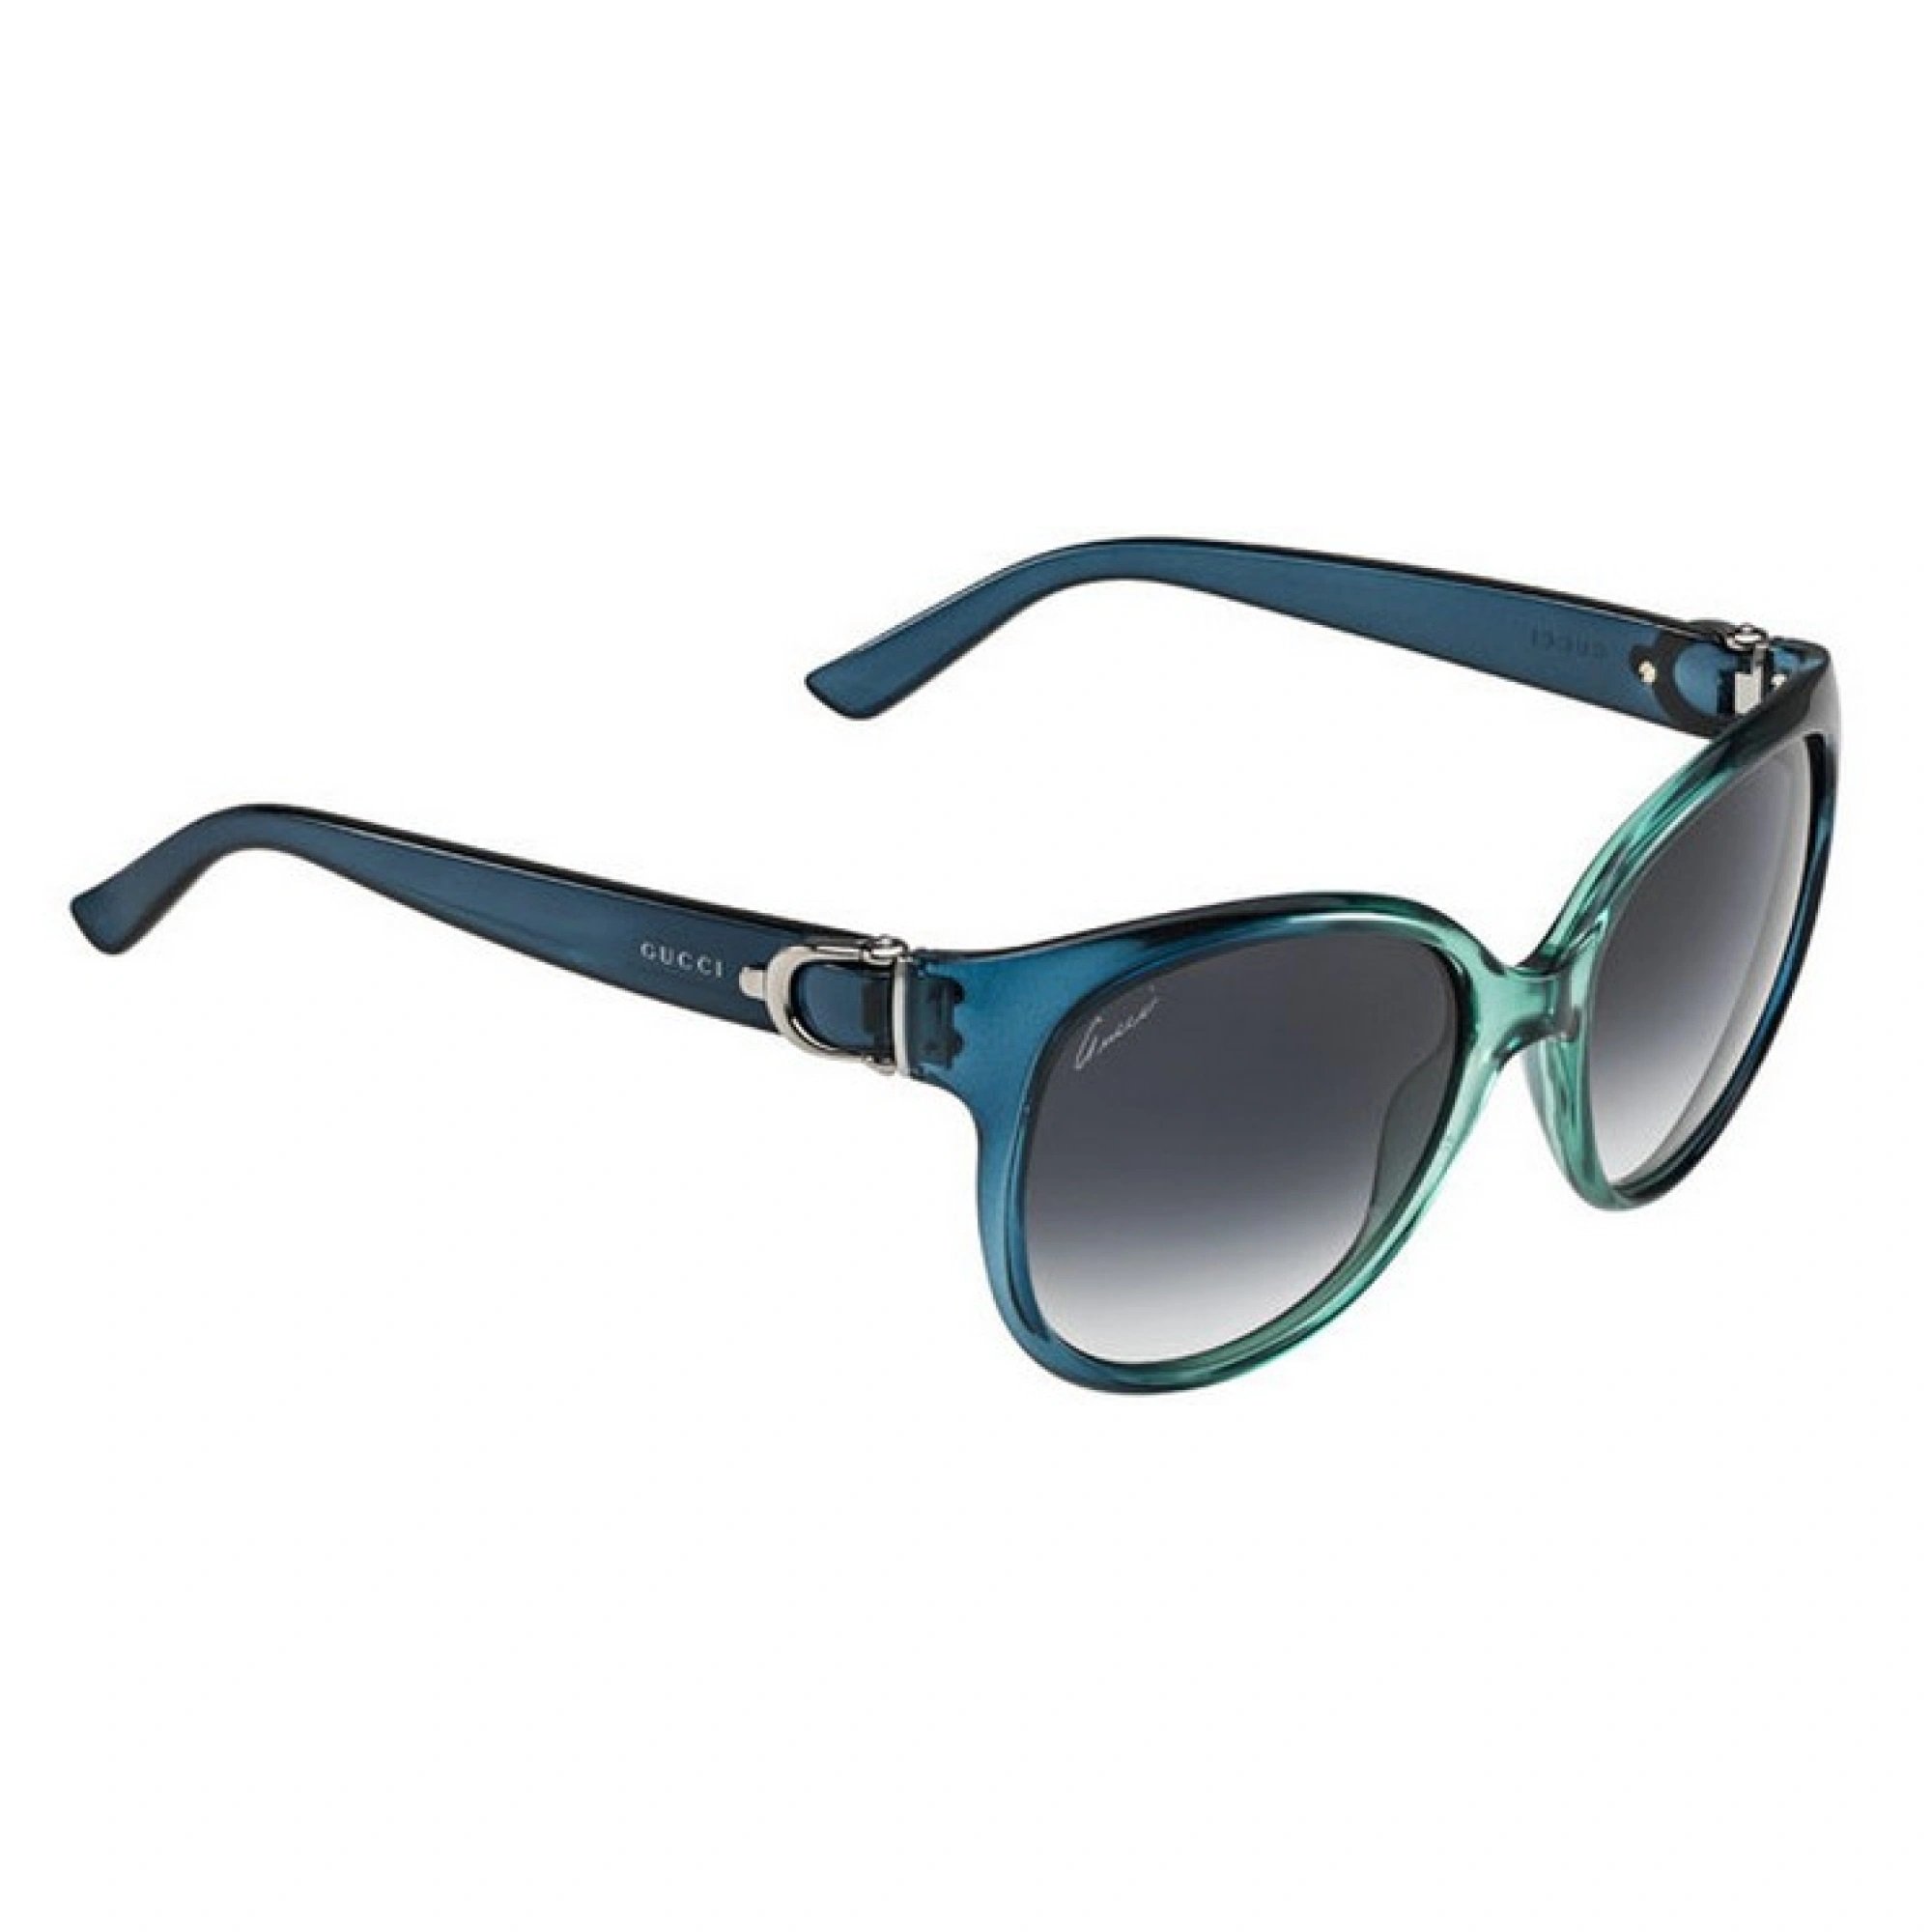 Gucci 3679-S 4SW Sunglasses in Blue.jpg